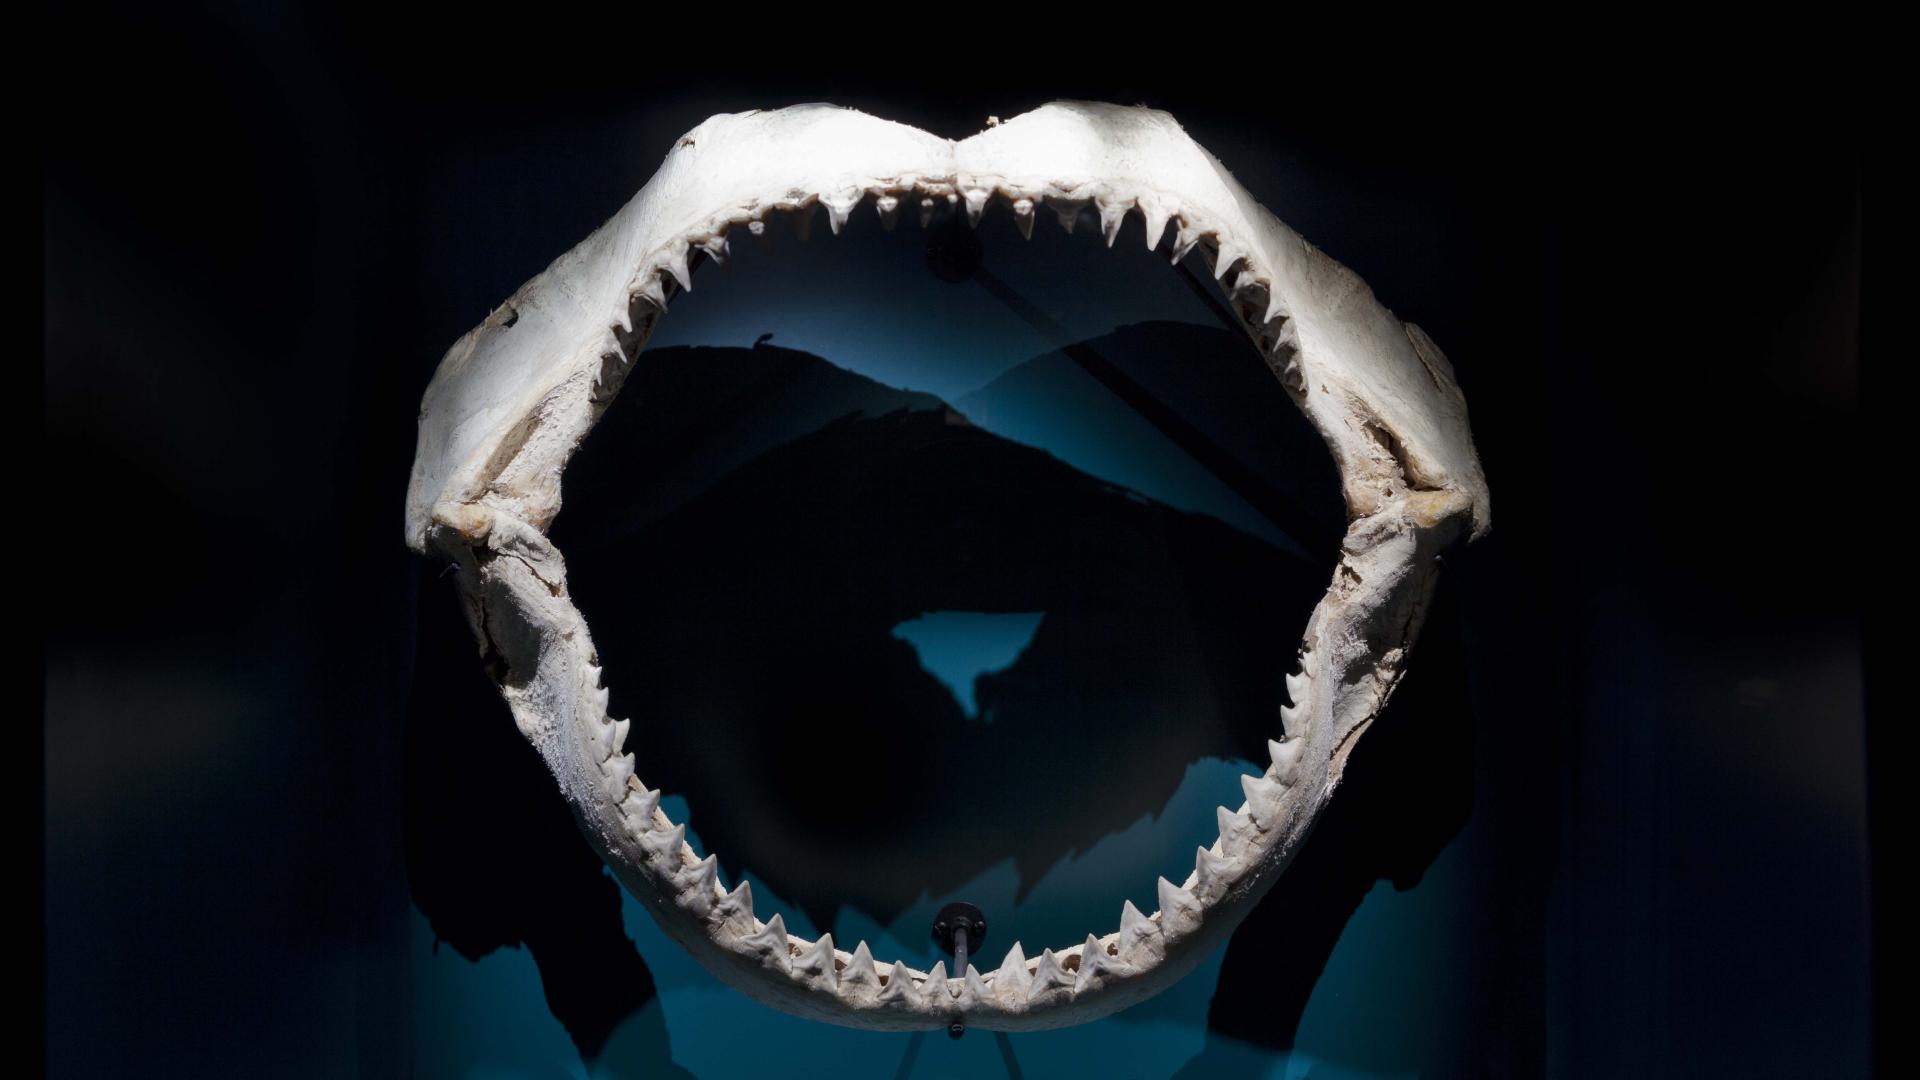 mandíbula tiburón en exhibición